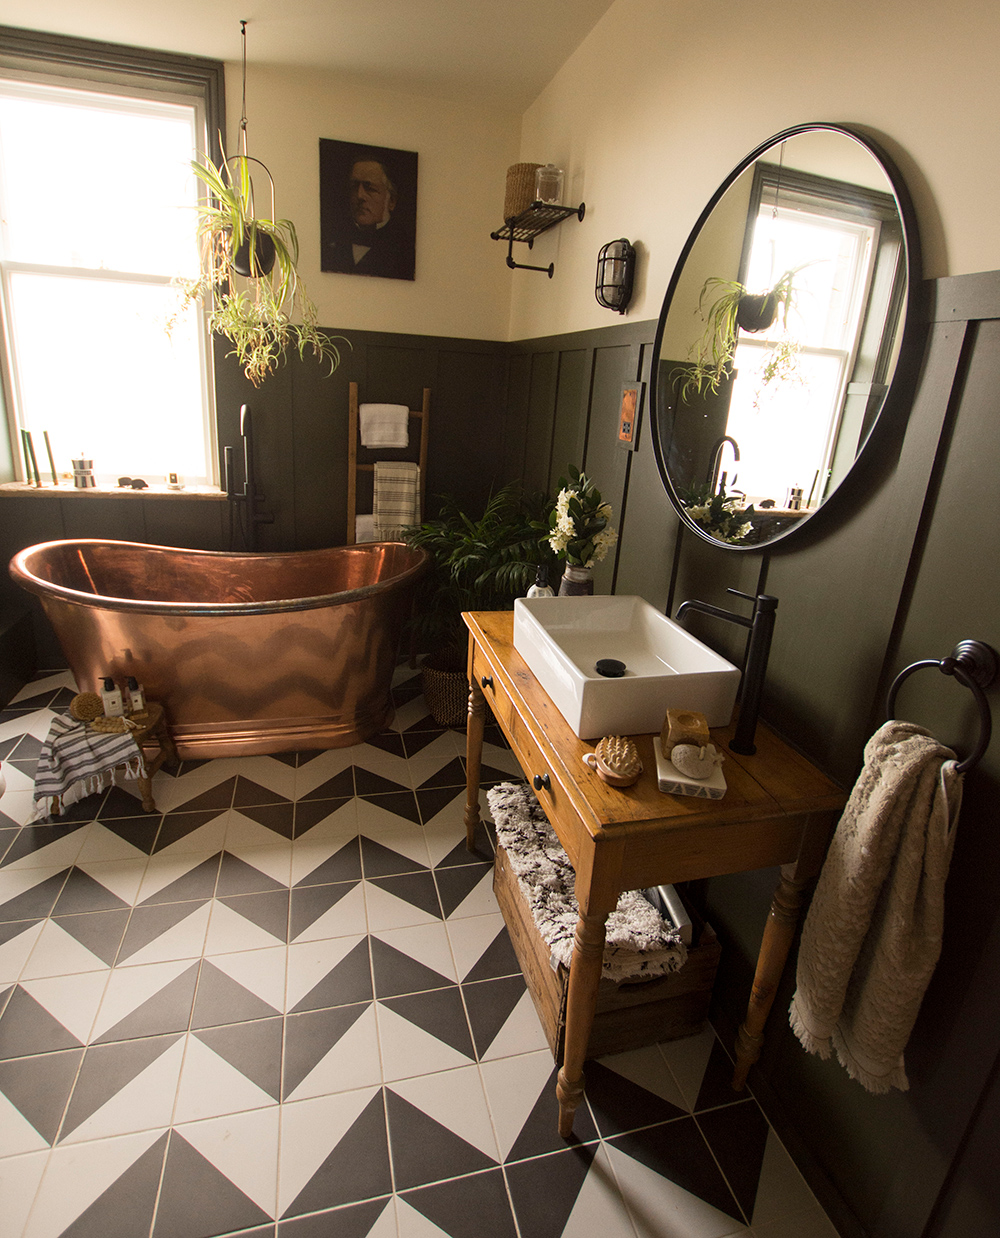 Bathroom inspiration - copper bathtub with monochrome patterned floor tiles